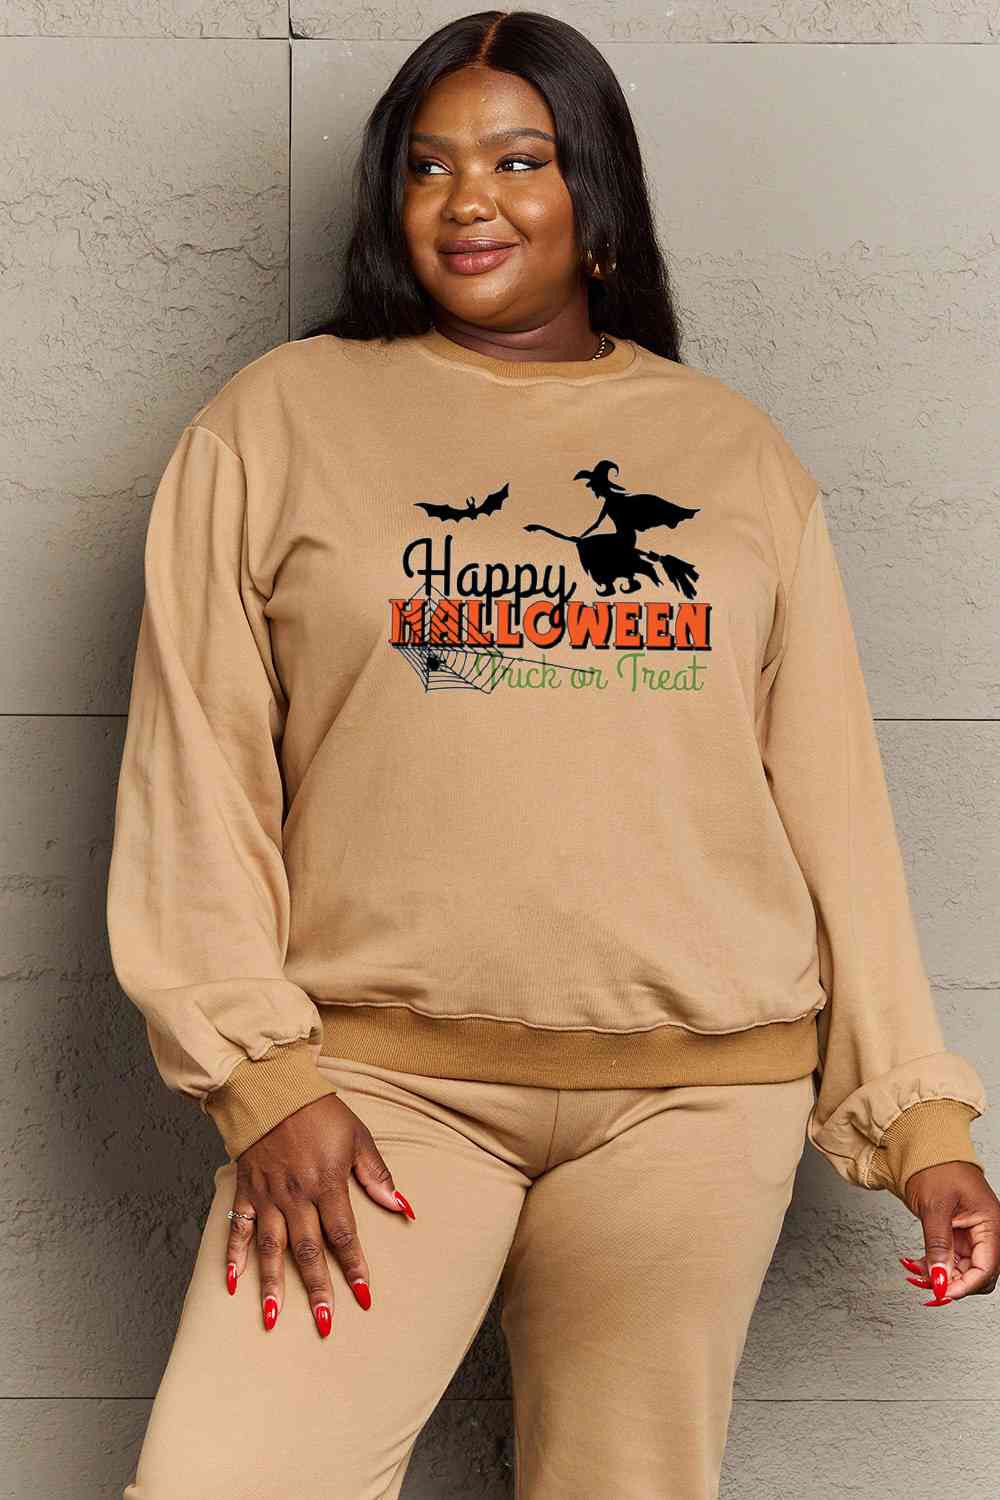 Simply Love Full Size HAPPY HALLOWEEN TRICK OR TREAT Graphic Sweatshirt, MyriadMart